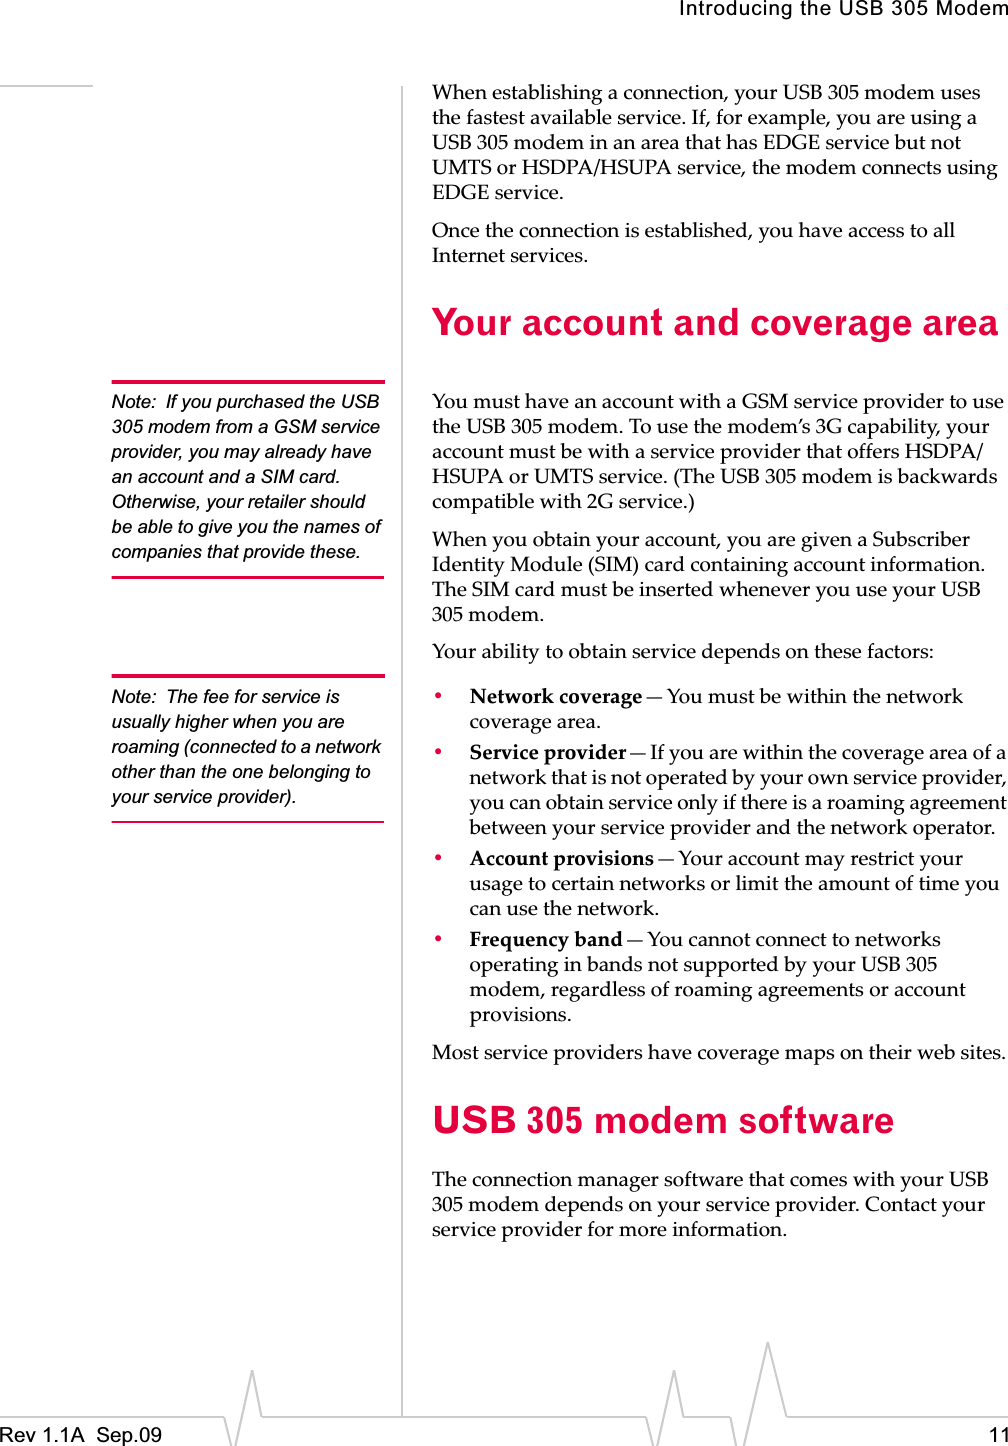 Introducing the USB 305 ModemRev 1.1A  Sep.09 11Whenȱestablishingȱaȱconnection,ȱyourȱUSBȱ305ȱmodemȱusesȱtheȱfastestȱavailableȱservice.ȱIf,ȱforȱexample,ȱyouȱareȱusingȱaȱUSBȱ305ȱmodemȱinȱanȱareaȱthatȱhasȱEDGEȱserviceȱbutȱnotȱUMTSȱorȱHSDPA/HSUPAȱservice,ȱtheȱmodemȱconnectsȱusingȱEDGEȱservice.ȱOnceȱtheȱconnectionȱisȱestablished,ȱyouȱhaveȱaccessȱtoȱallȱInternetȱservices.Your account and coverage areaNote: If you purchased the USB 305 modem from a GSM service provider, you may already have an account and a SIM card. Otherwise, your retailer should be able to give you the names of companies that provide these.YouȱmustȱhaveȱanȱaccountȱwithȱaȱGSMȱserviceȱproviderȱtoȱuseȱtheȱUSBȱ305ȱmodem.ȱToȱuseȱtheȱmodem’sȱ3Gȱcapability,ȱyourȱaccountȱmustȱbeȱwithȱaȱserviceȱproviderȱthatȱoffersȱHSDPA/HSUPAȱorȱUMTSȱservice.ȱ(TheȱUSBȱ305ȱmodemȱisȱbackwardsȱcompatibleȱwithȱ2Gȱservice.)Whenȱyouȱobtainȱyourȱaccount,ȱyouȱareȱgivenȱaȱSubscriberȱIdentityȱModuleȱ(SIM)ȱcardȱcontainingȱaccountȱinformation.ȱTheȱSIMȱcardȱmustȱbeȱinsertedȱwheneverȱyouȱuseȱyourȱUSBȱ305ȱmodem.Yourȱabilityȱtoȱobtainȱserviceȱdependsȱonȱtheseȱfactors:Note: The fee for service is usually higher when you are roaming (connected to a network other than the one belonging to your service provider).•Networkȱcoverage—Youȱmustȱbeȱwithinȱtheȱnetworkȱcoverageȱarea.•Serviceȱprovider—Ifȱyouȱareȱwithinȱtheȱcoverageȱareaȱofȱaȱnetworkȱthatȱisȱnotȱoperatedȱbyȱyourȱownȱserviceȱprovider,ȱyouȱcanȱobtainȱserviceȱonlyȱifȱthereȱisȱaȱroamingȱagreementȱbetweenȱyourȱserviceȱproviderȱandȱtheȱnetworkȱoperator.•Accountȱprovisions—Yourȱaccountȱmayȱrestrictȱyourȱusageȱtoȱcertainȱnetworksȱorȱlimitȱtheȱamountȱofȱtimeȱyouȱcanȱuseȱtheȱnetwork.•Frequencyȱband—YouȱcannotȱconnectȱtoȱnetworksȱoperatingȱinȱbandsȱnotȱsupportedȱbyȱyourȱUSBȱ305ȱmodem,ȱregardlessȱofȱroamingȱagreementsȱorȱaccountȱprovisions.Mostȱserviceȱprovidersȱhaveȱcoverageȱmapsȱonȱtheirȱwebȱsites.USB 305 modem softwareTheȱconnectionȱmanagerȱsoftwareȱthatȱcomesȱwithȱyourȱUSBȱ305ȱmodemȱdependsȱonȱyourȱserviceȱprovider.ȱContactȱyourȱserviceȱproviderȱforȱmoreȱinformation.